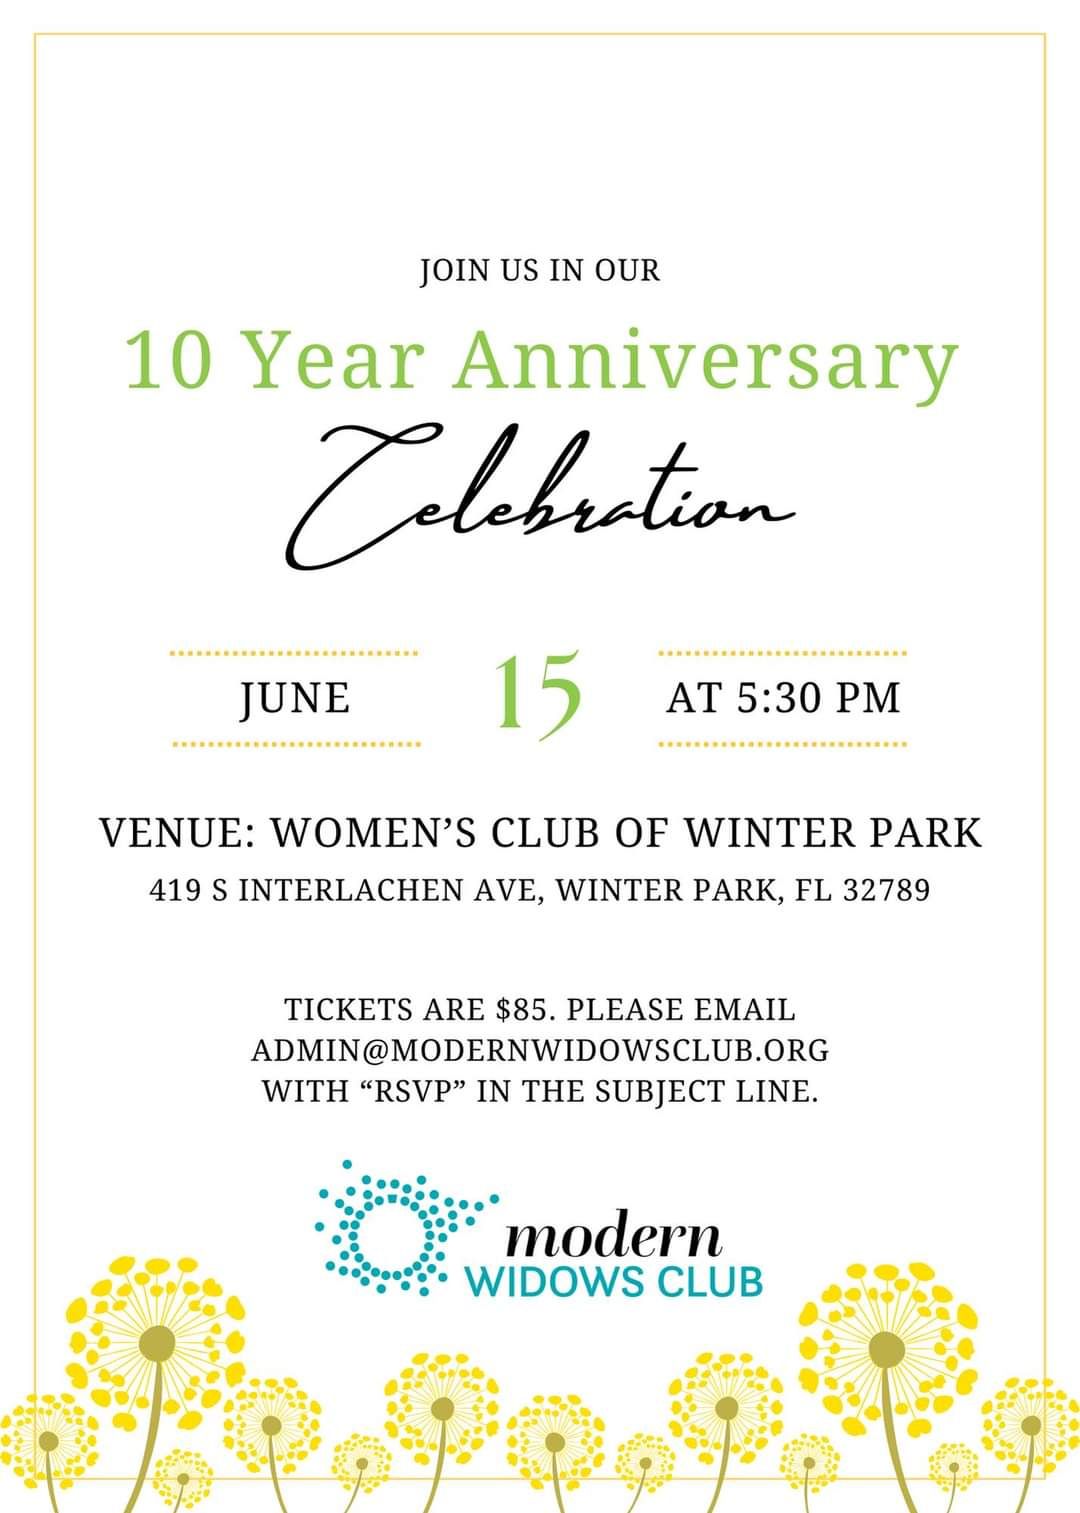 Celebrating 10 Years of the Modern Widows Club